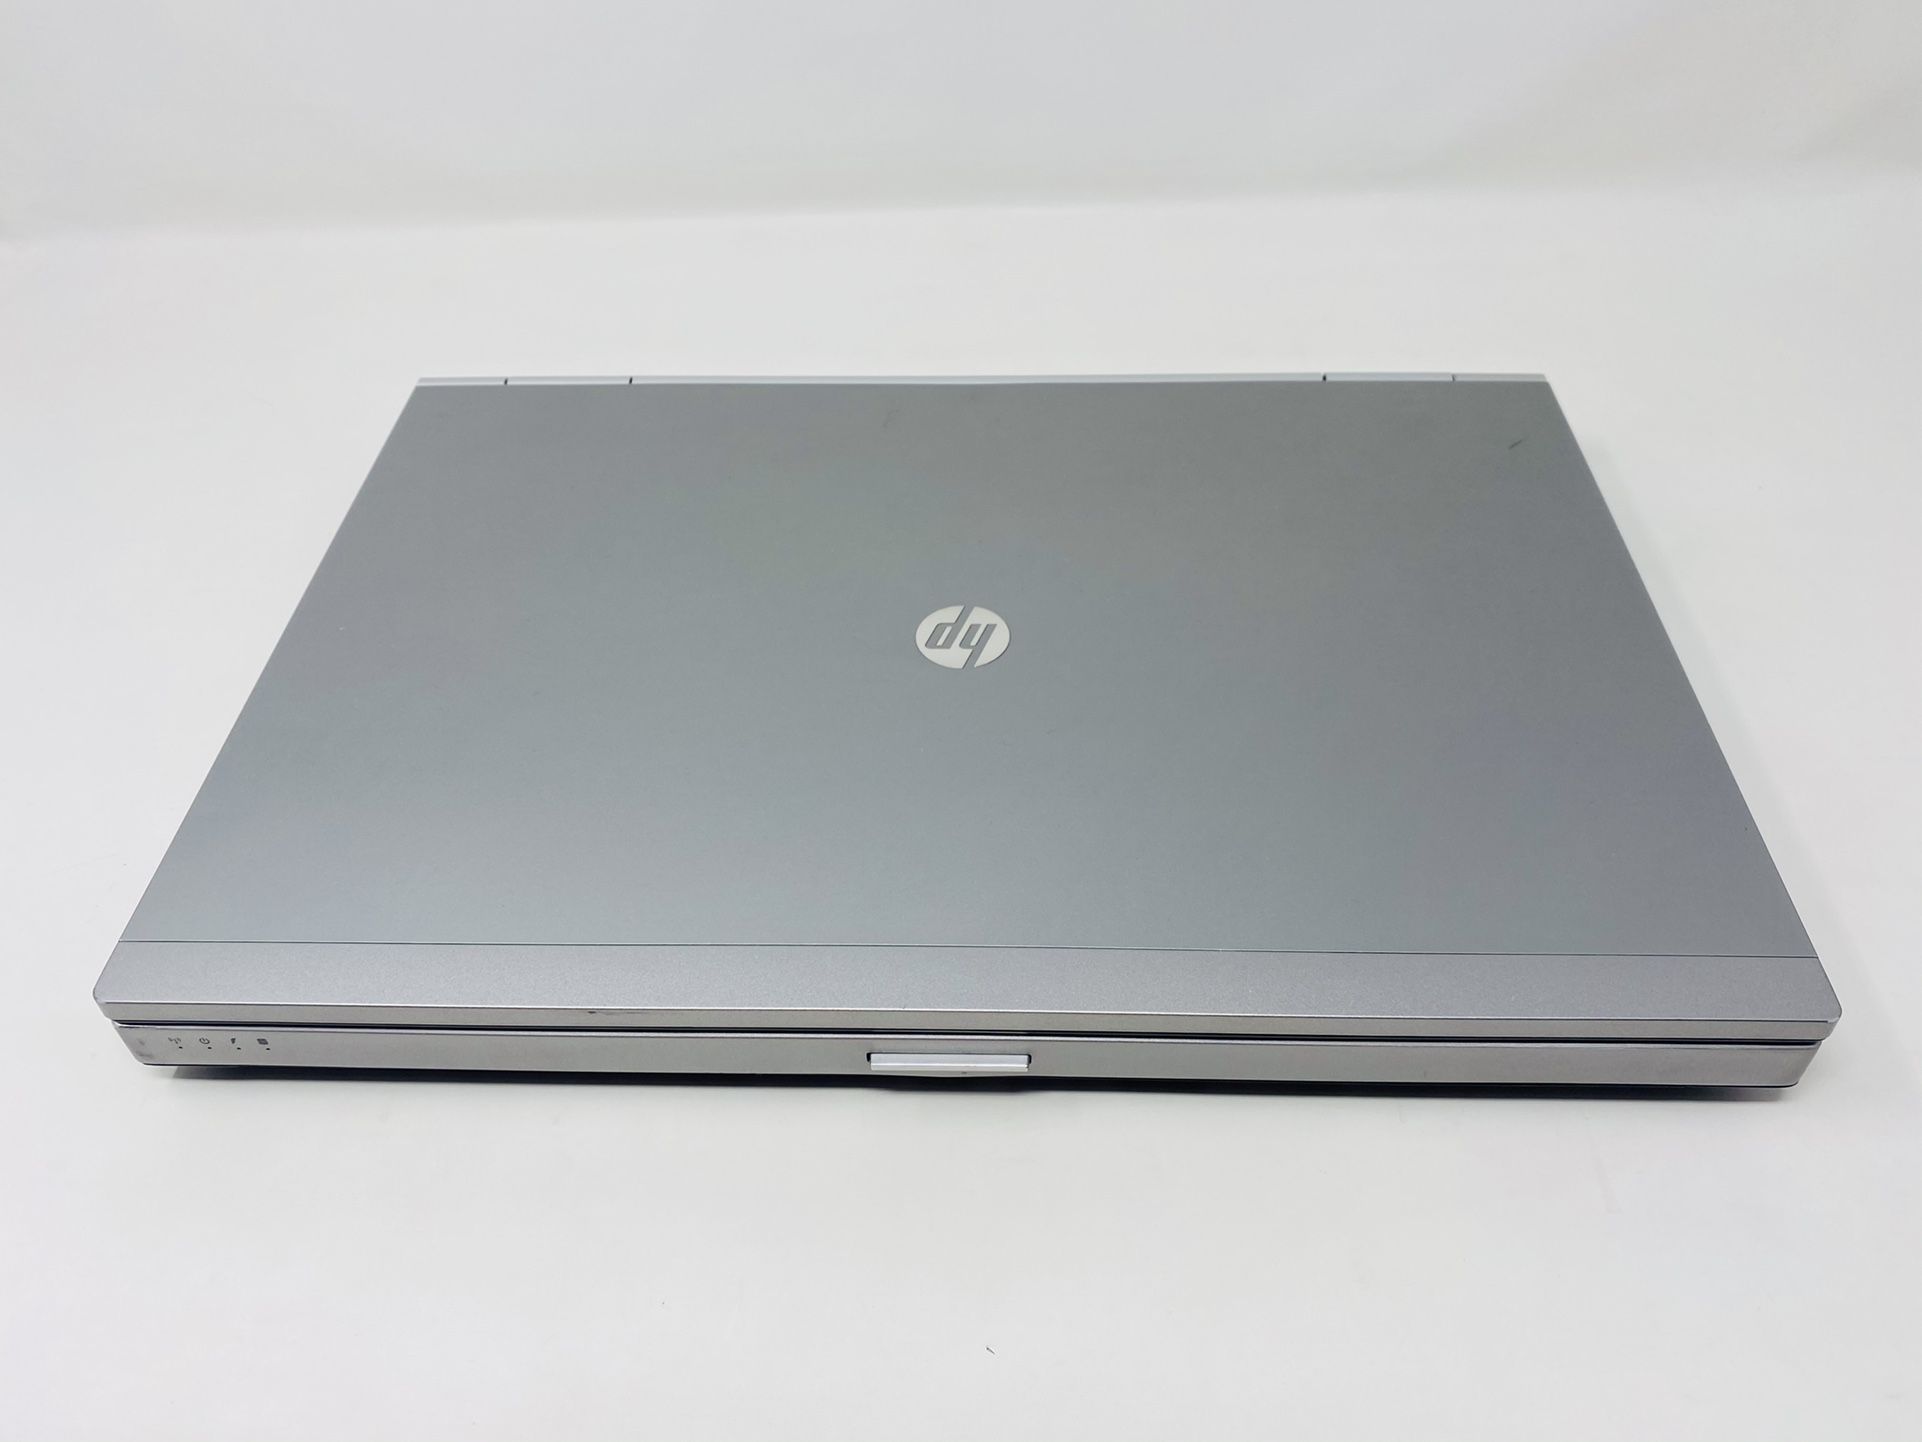 HP Elitebook 8460p Laptop i5 Processor 4GB Ram Windows 10 Pro